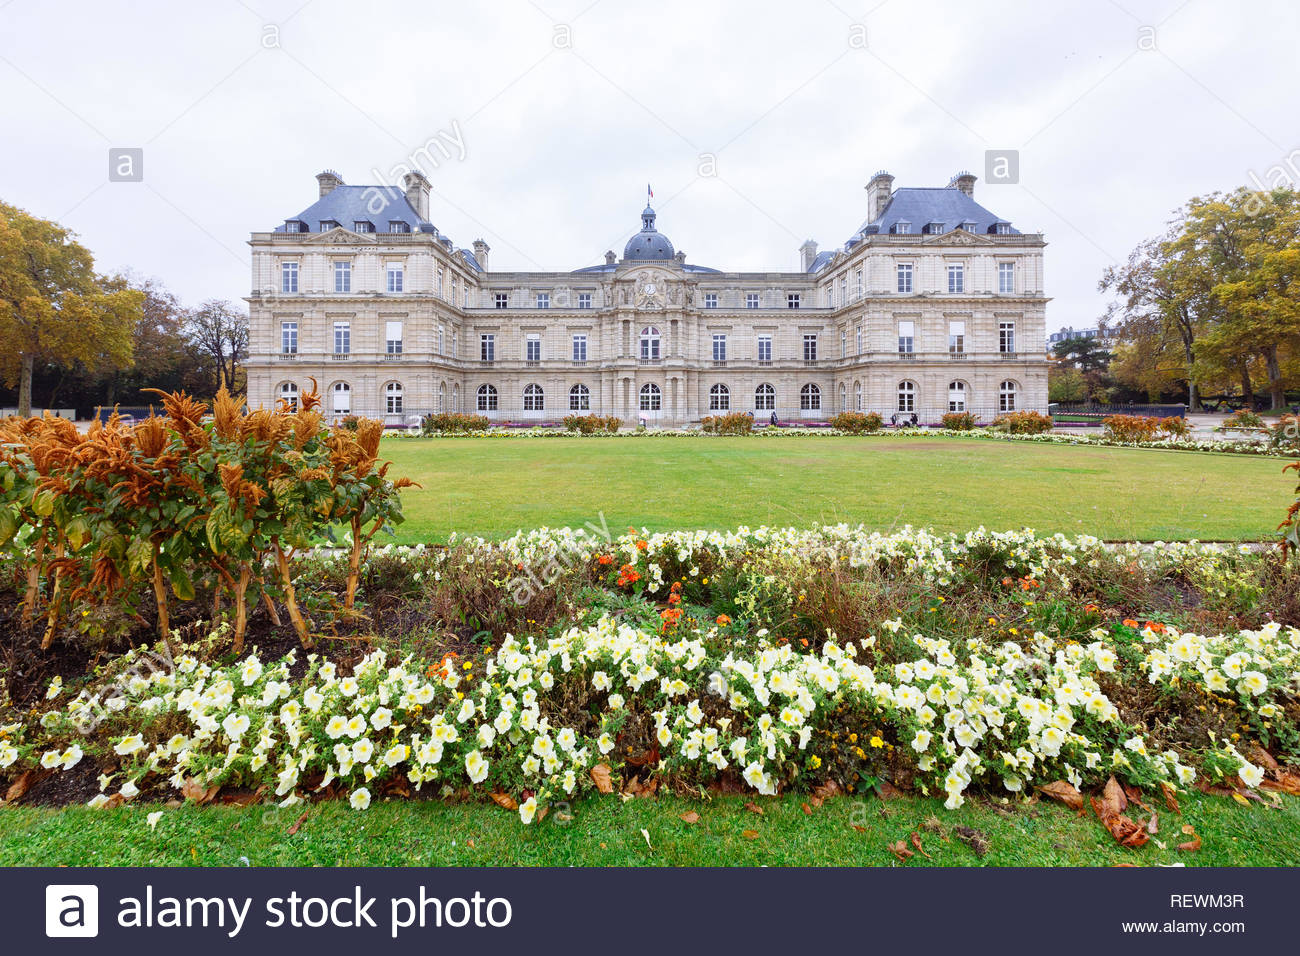 paris france luxembourg palace in luxembourg garden jardin de luxembourg REWM3R